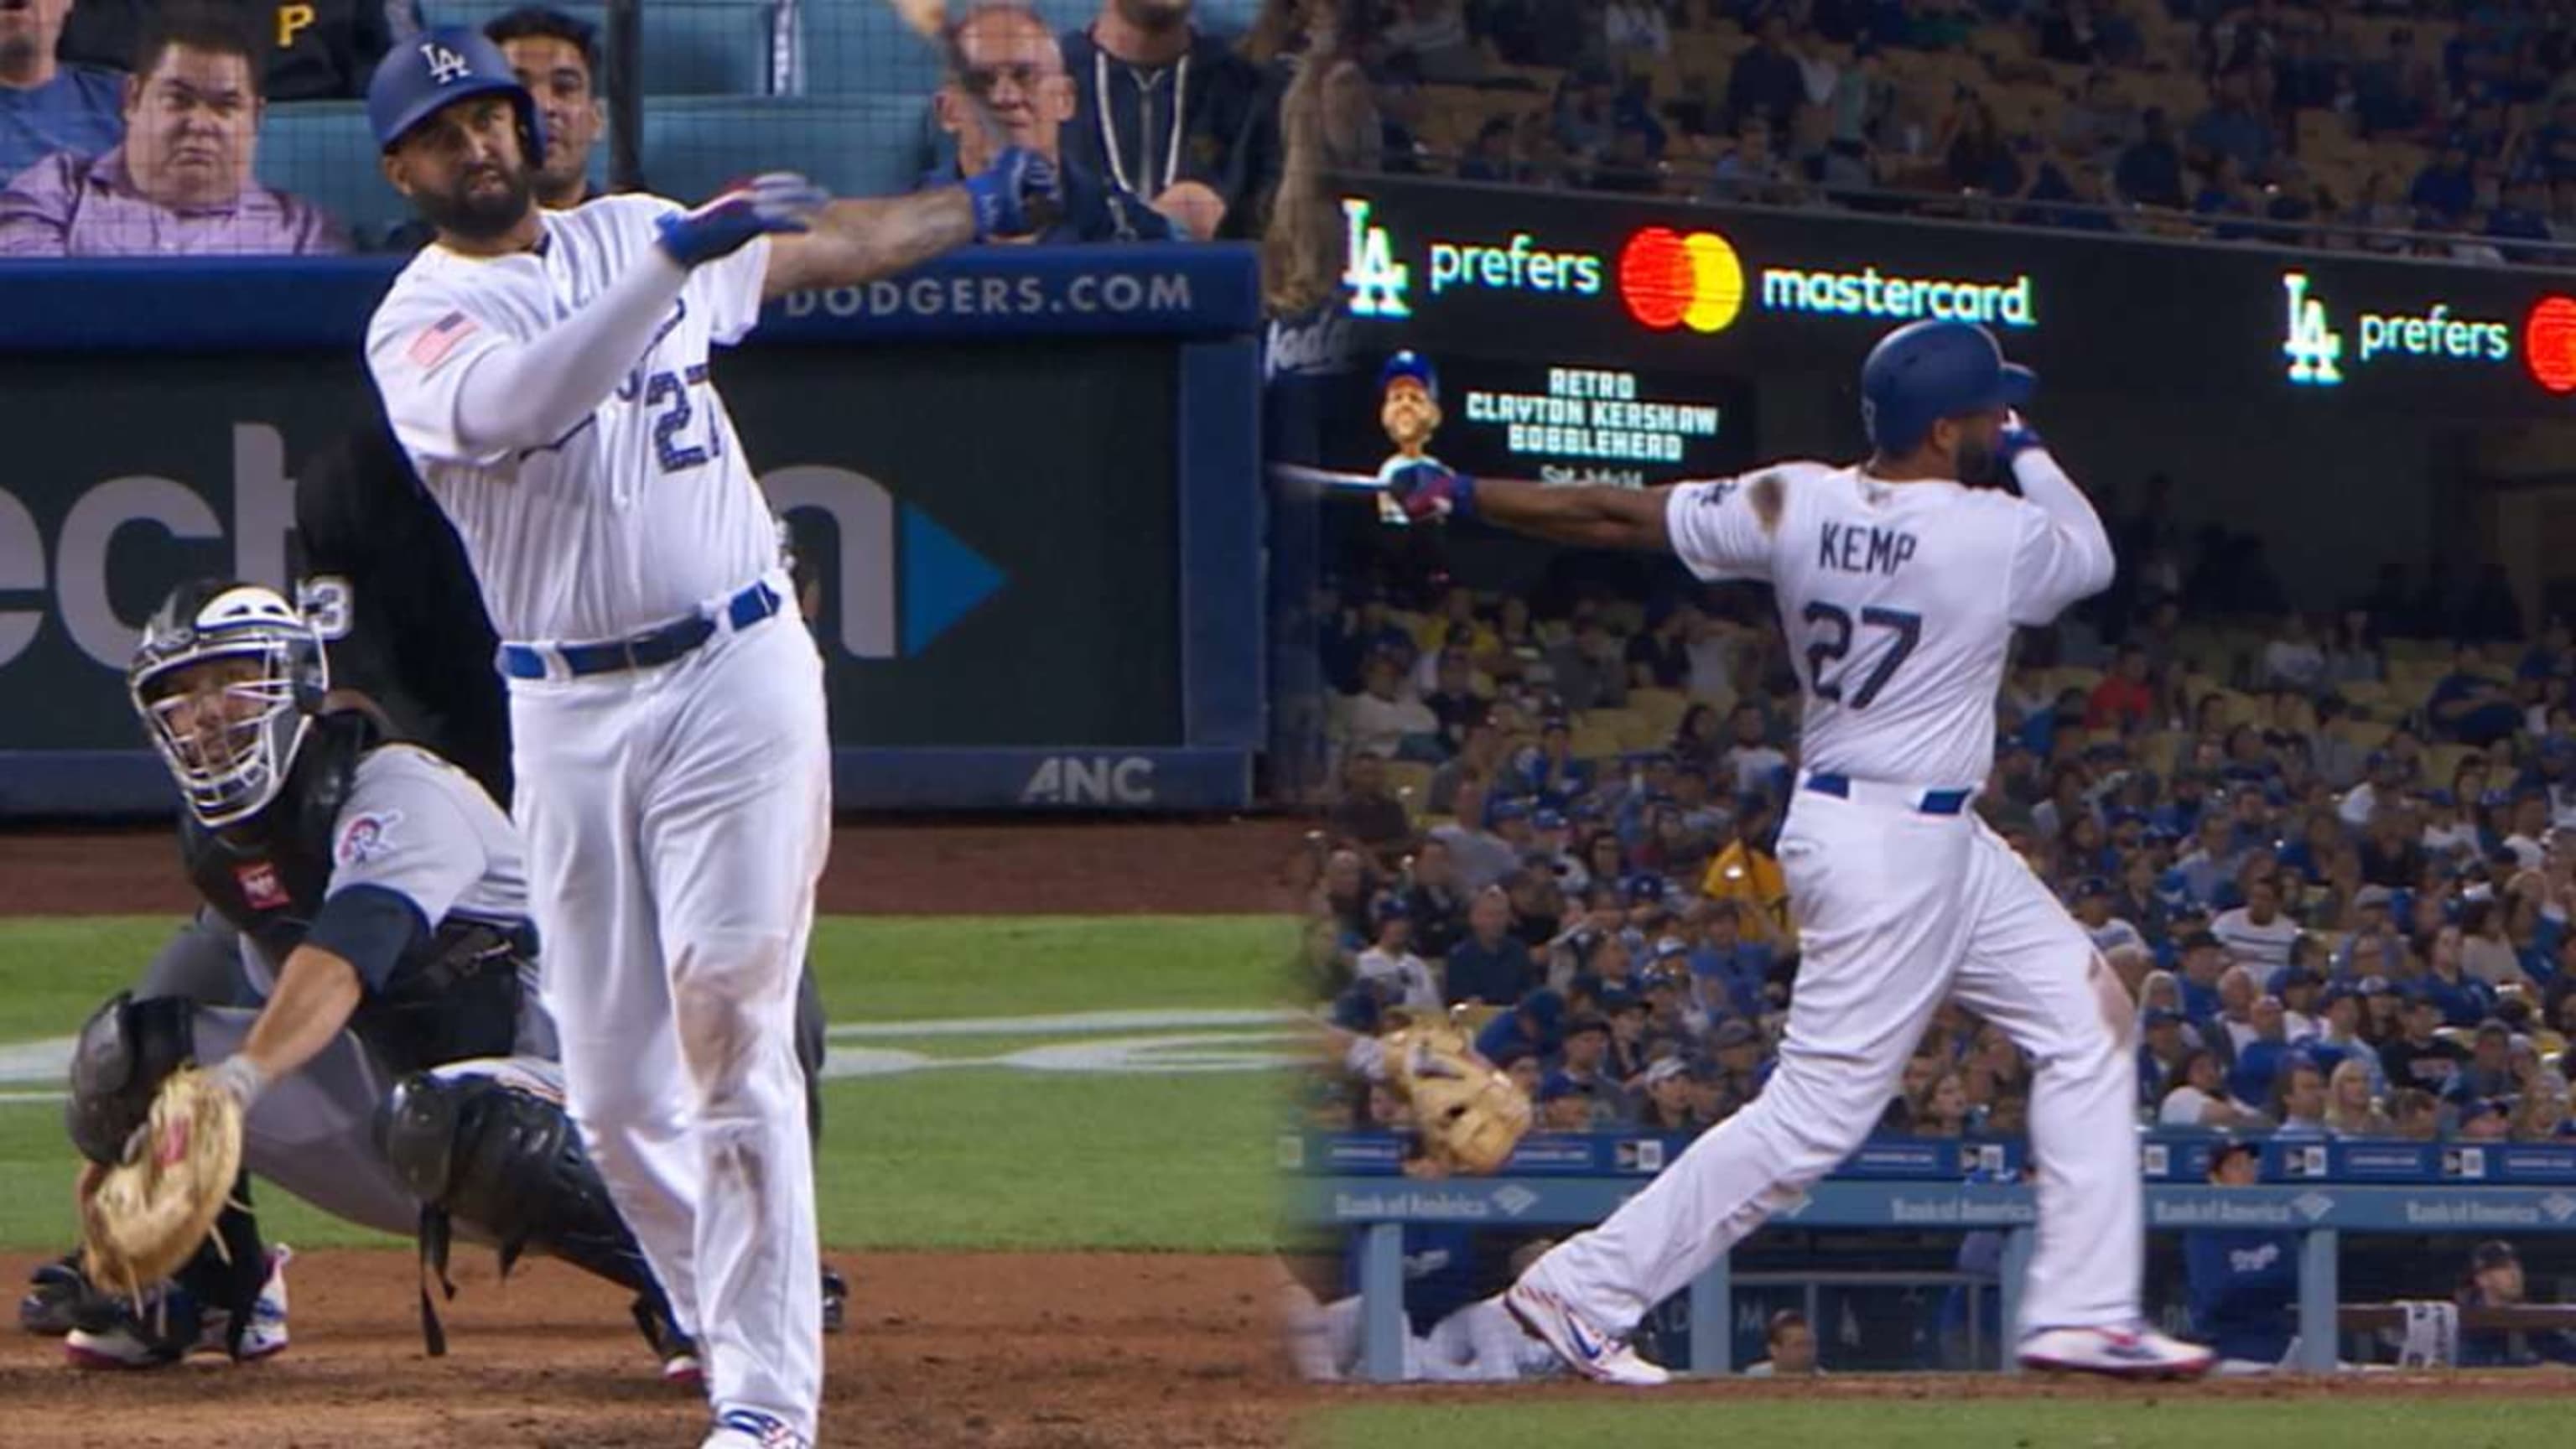 Dodgers Matt Kemp had 5 hits, is awesome again 